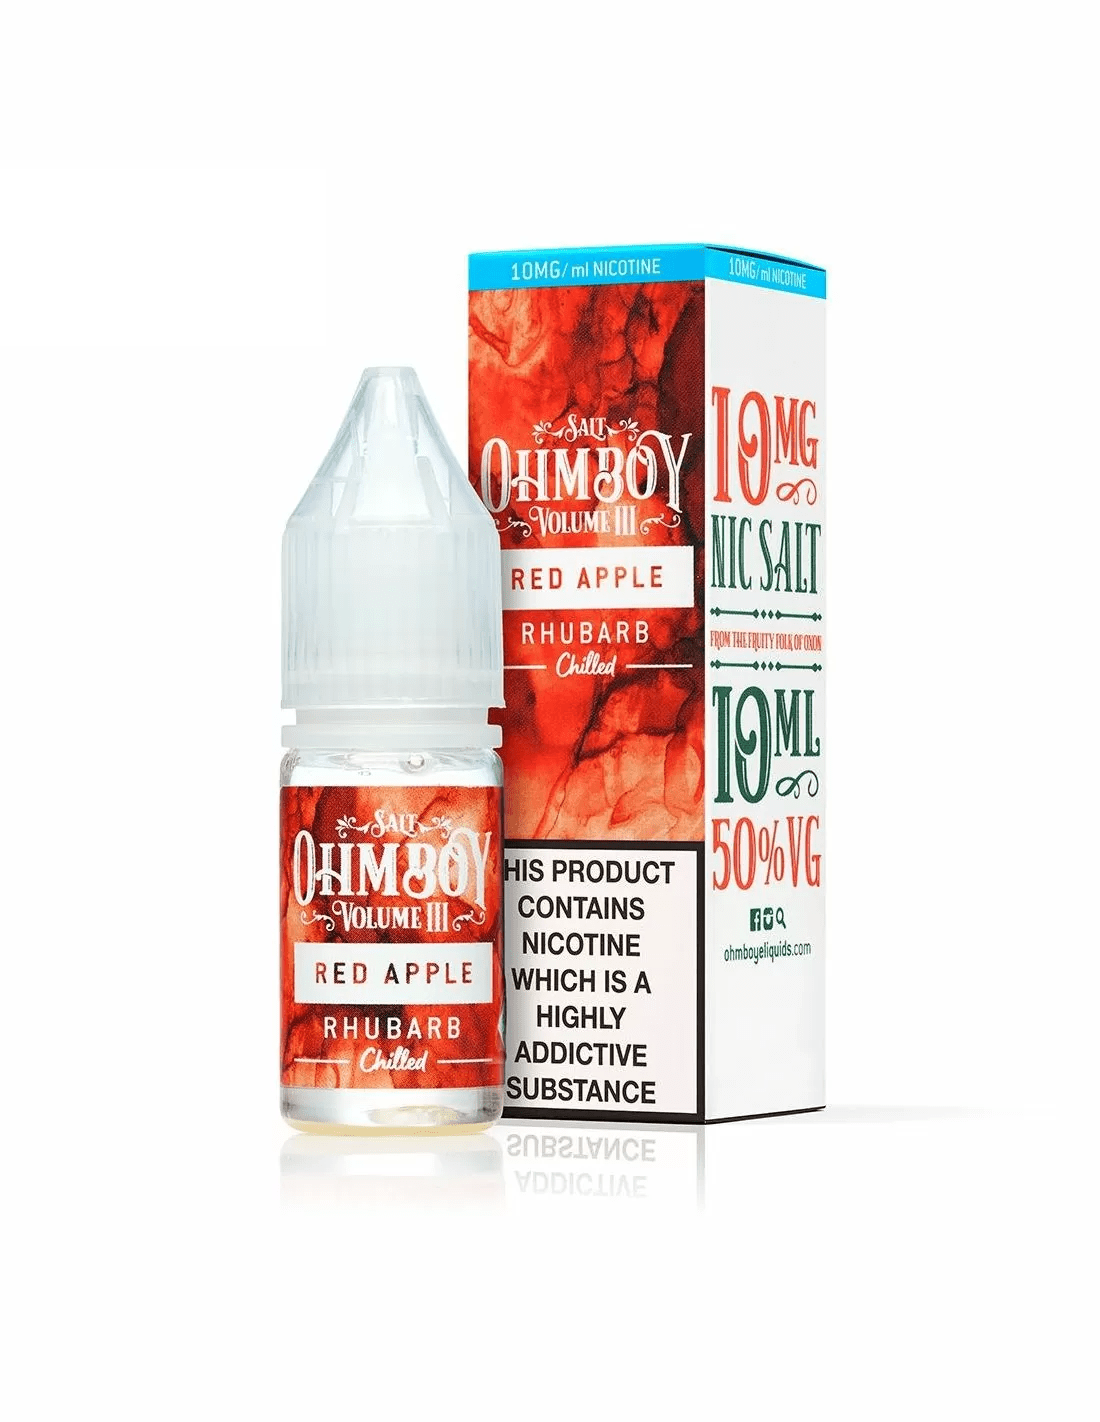  Red Apple Rhubarb Chilled Nic Salt E-Liquid by Ohm Boy Volume III 10ml 